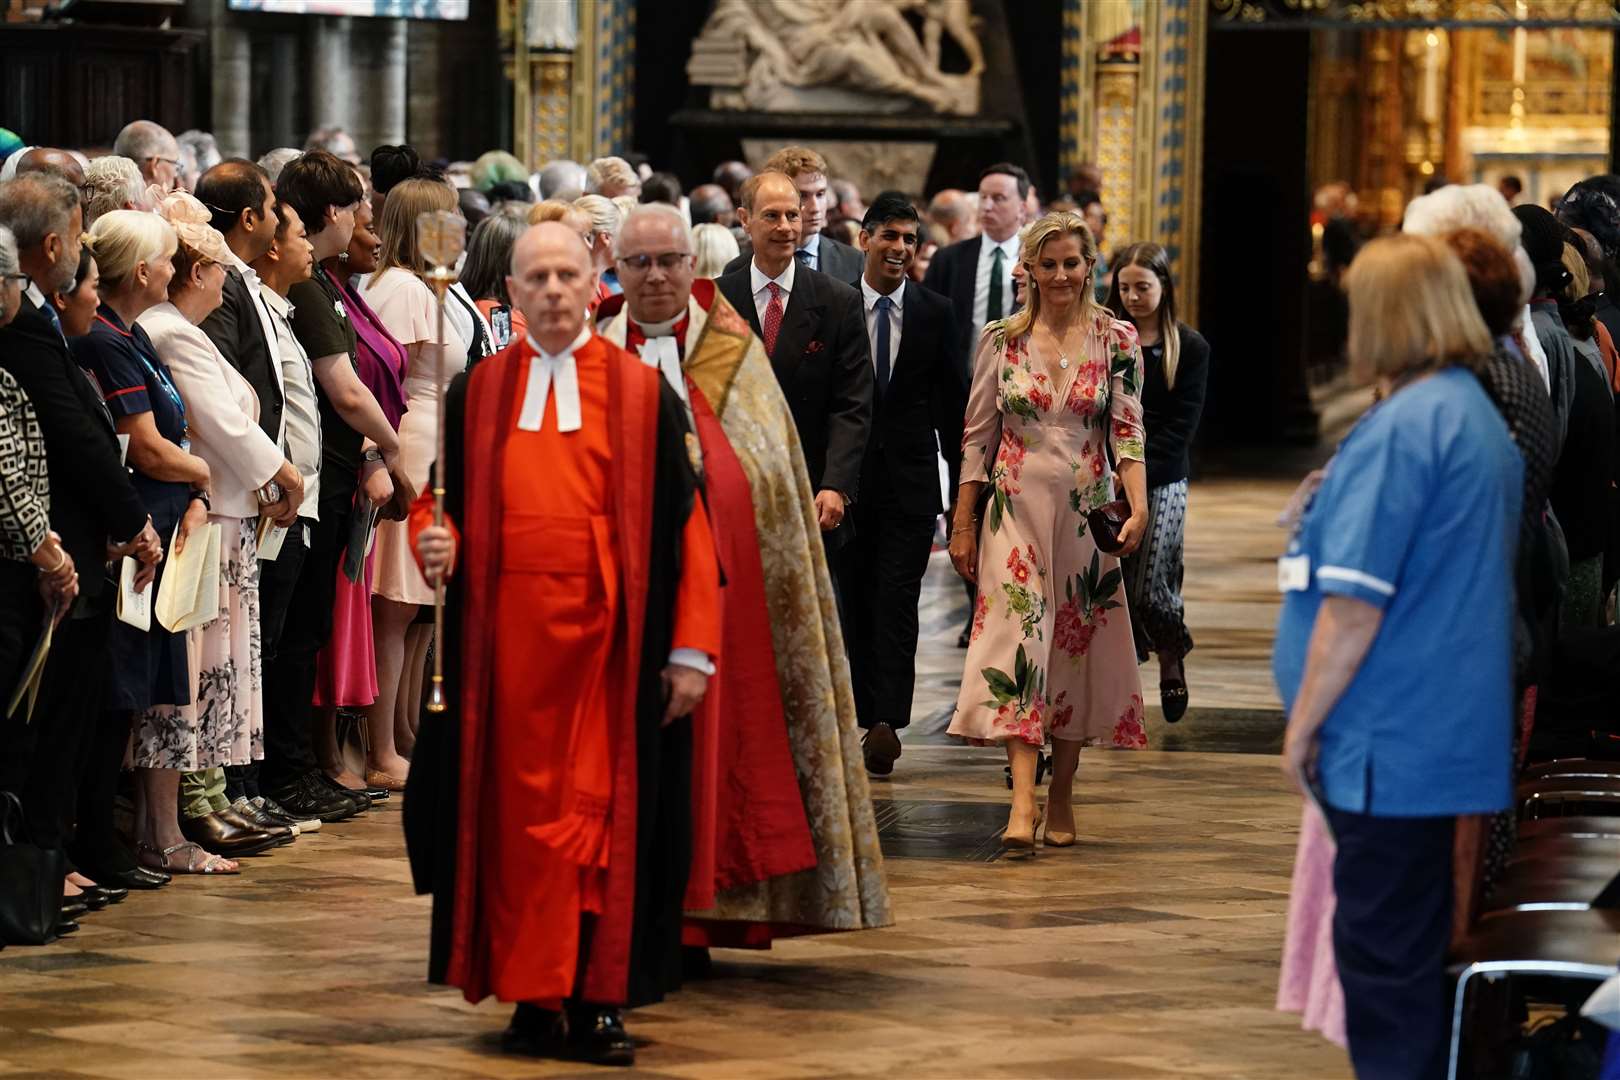 The Prime Minister and Duke and Duchess of Edinburgh attended the service (Jordan Pettitt/PA)